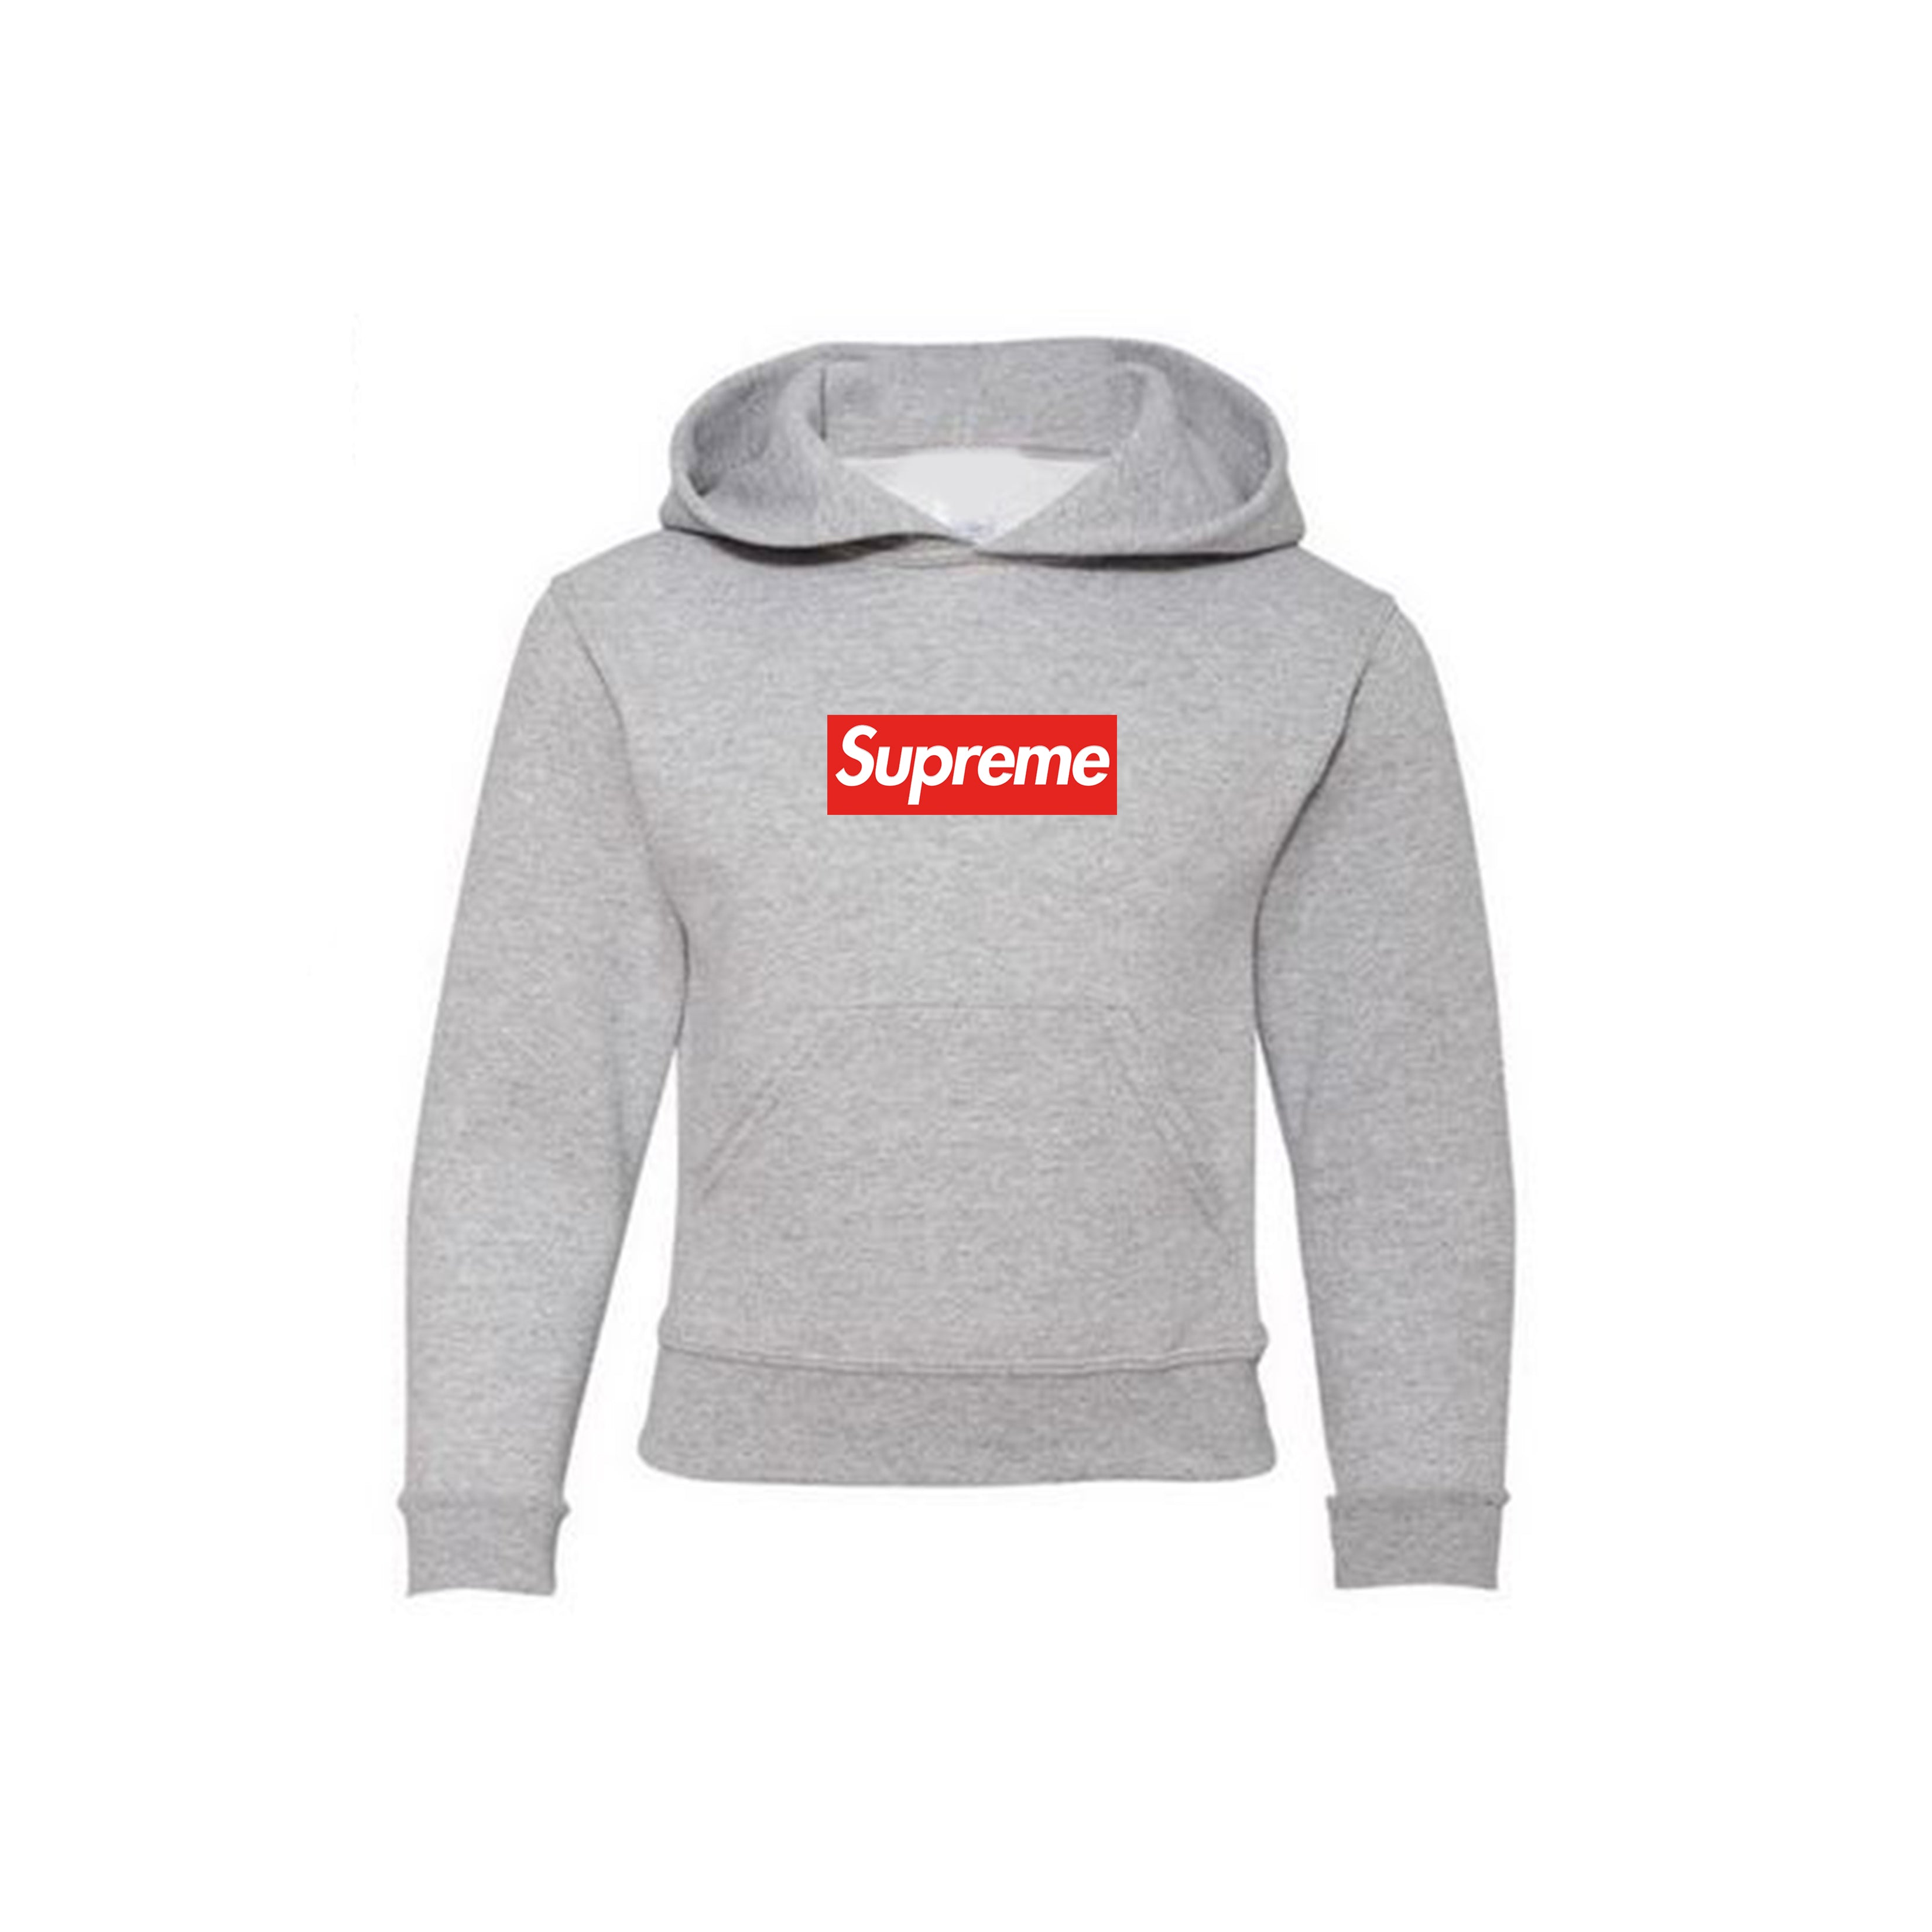 Supreme, Sweaters